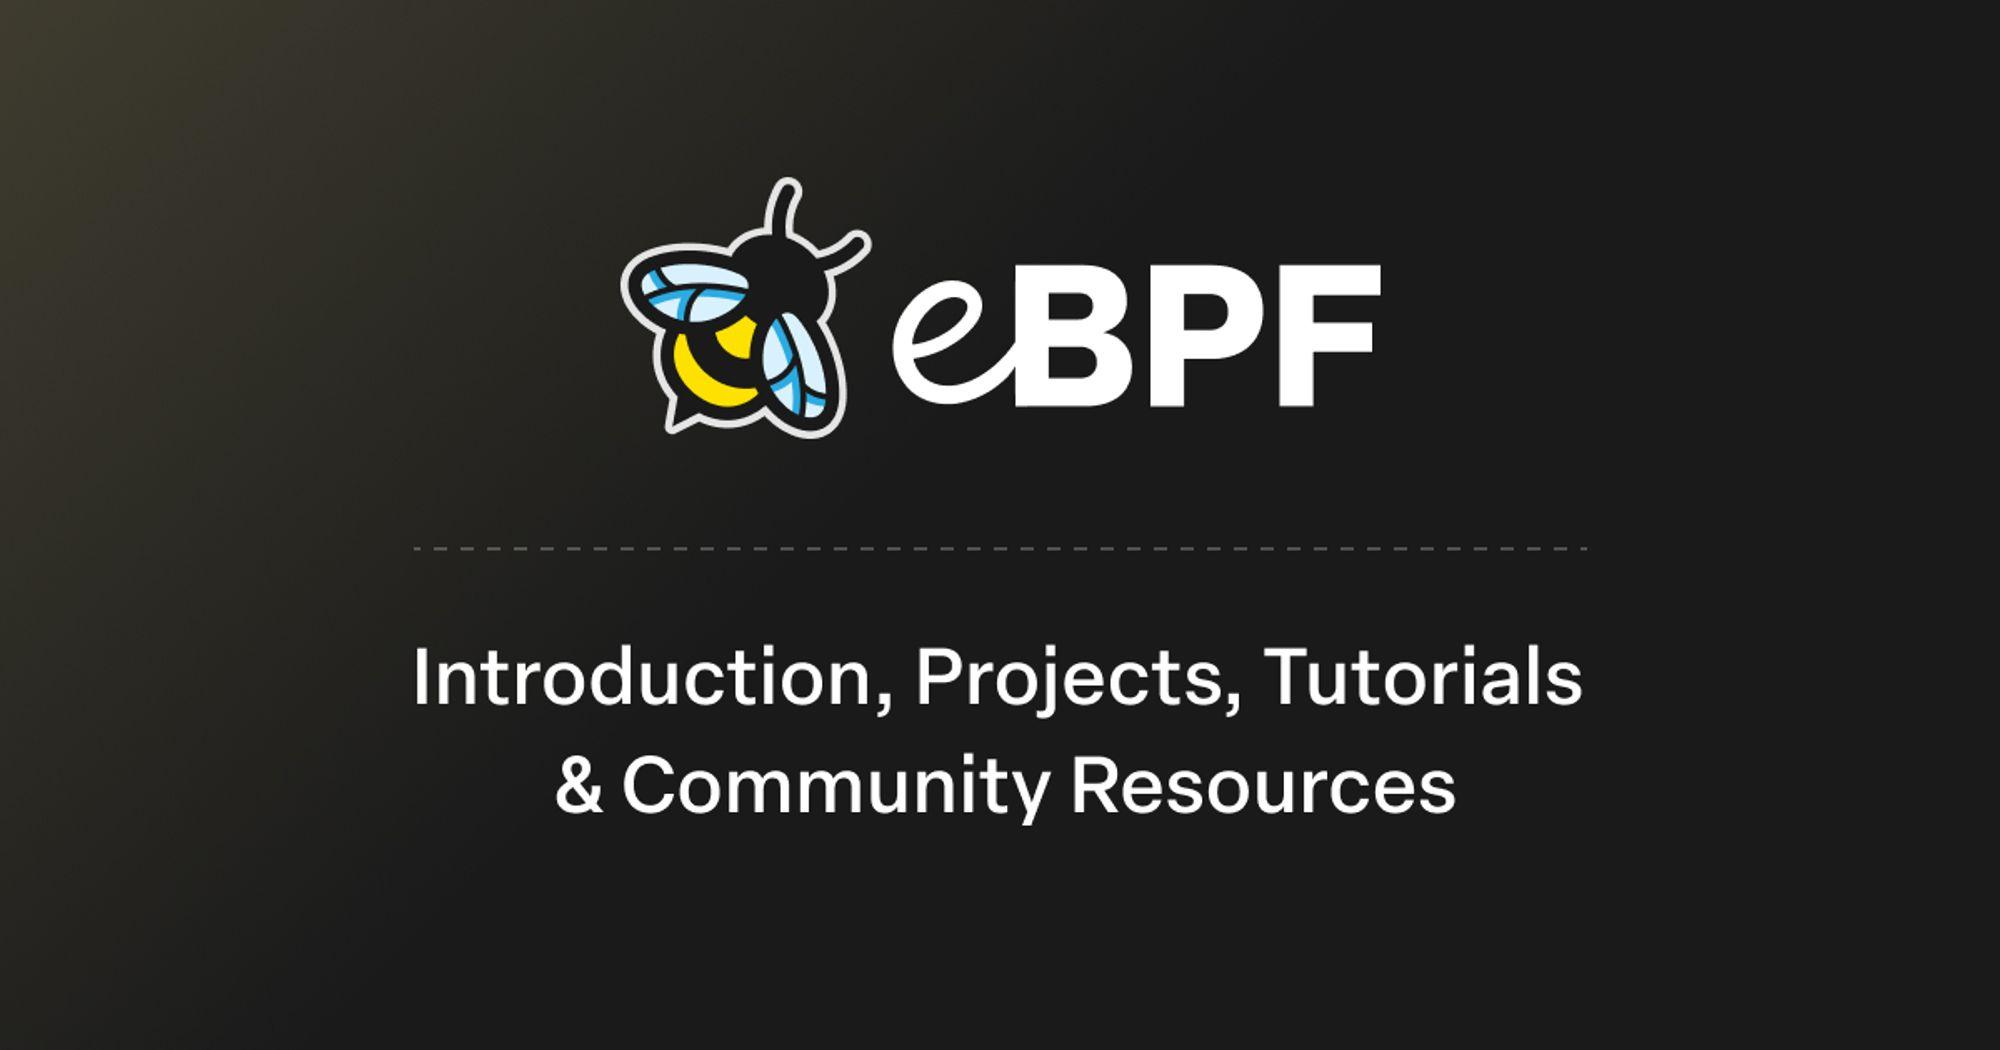 eBPF - Introduction, Tutorials & Community Resources